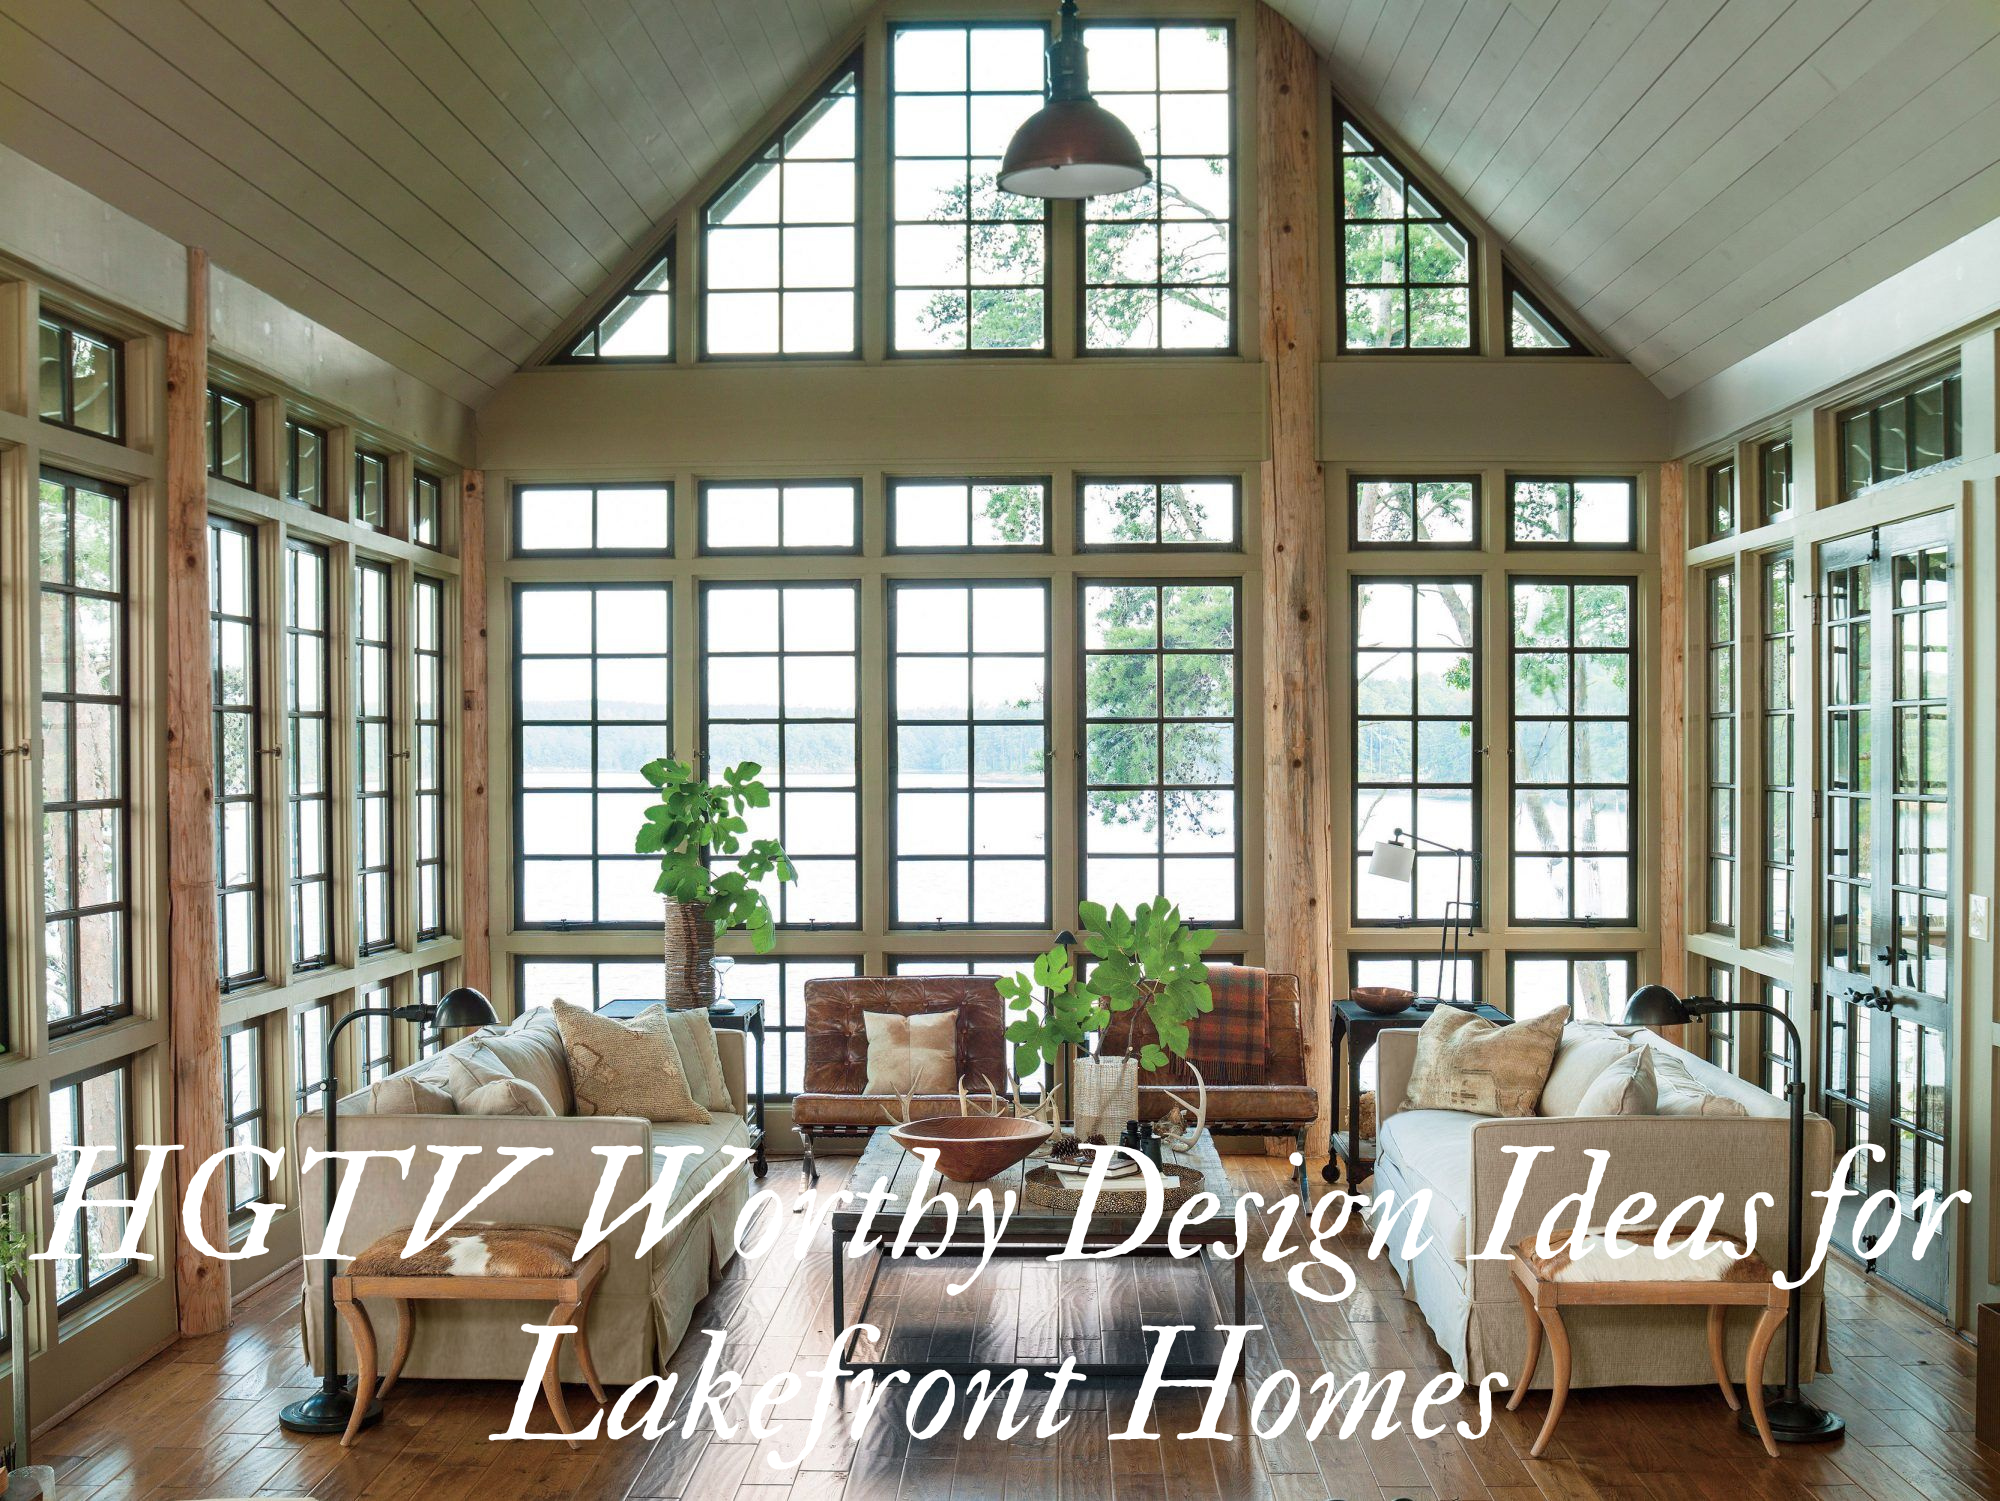 Hgtv Worthy Design Ideas For Lakefront